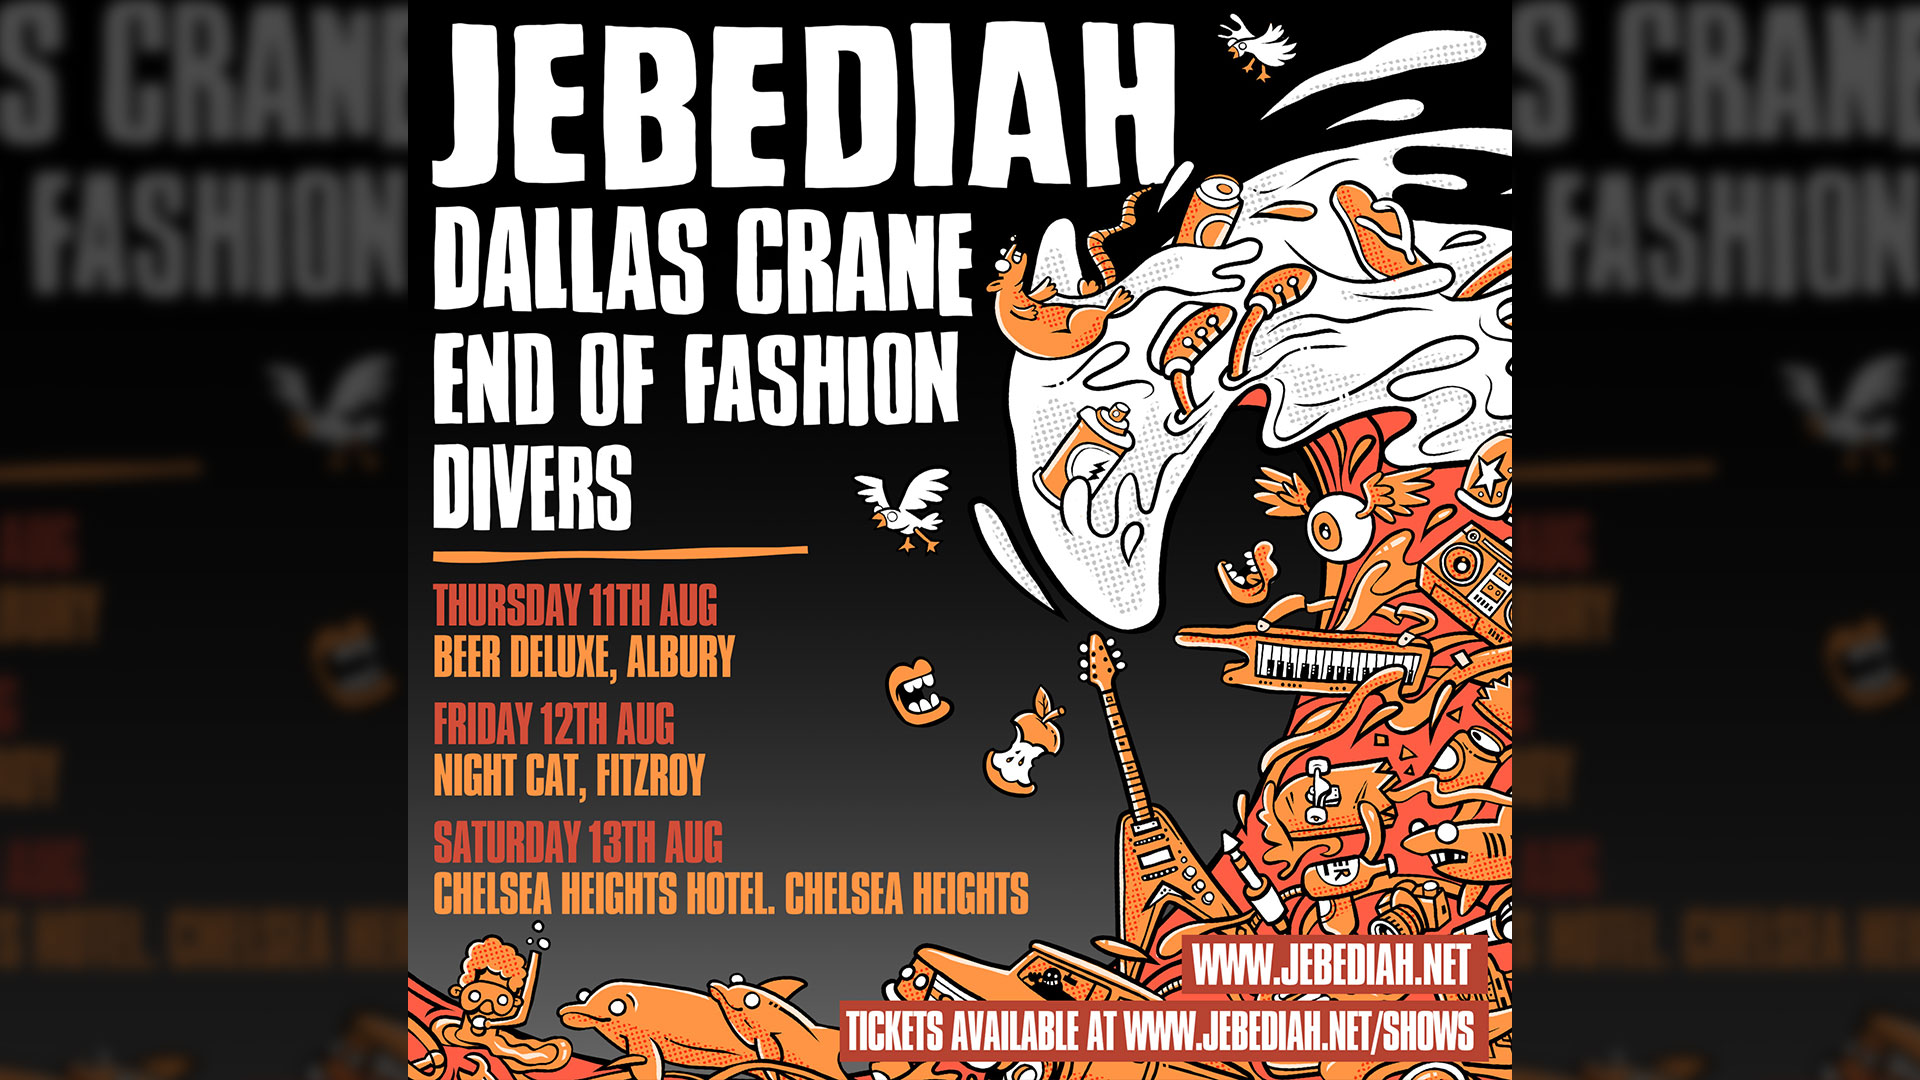 Dallas-Crane-Jebediah